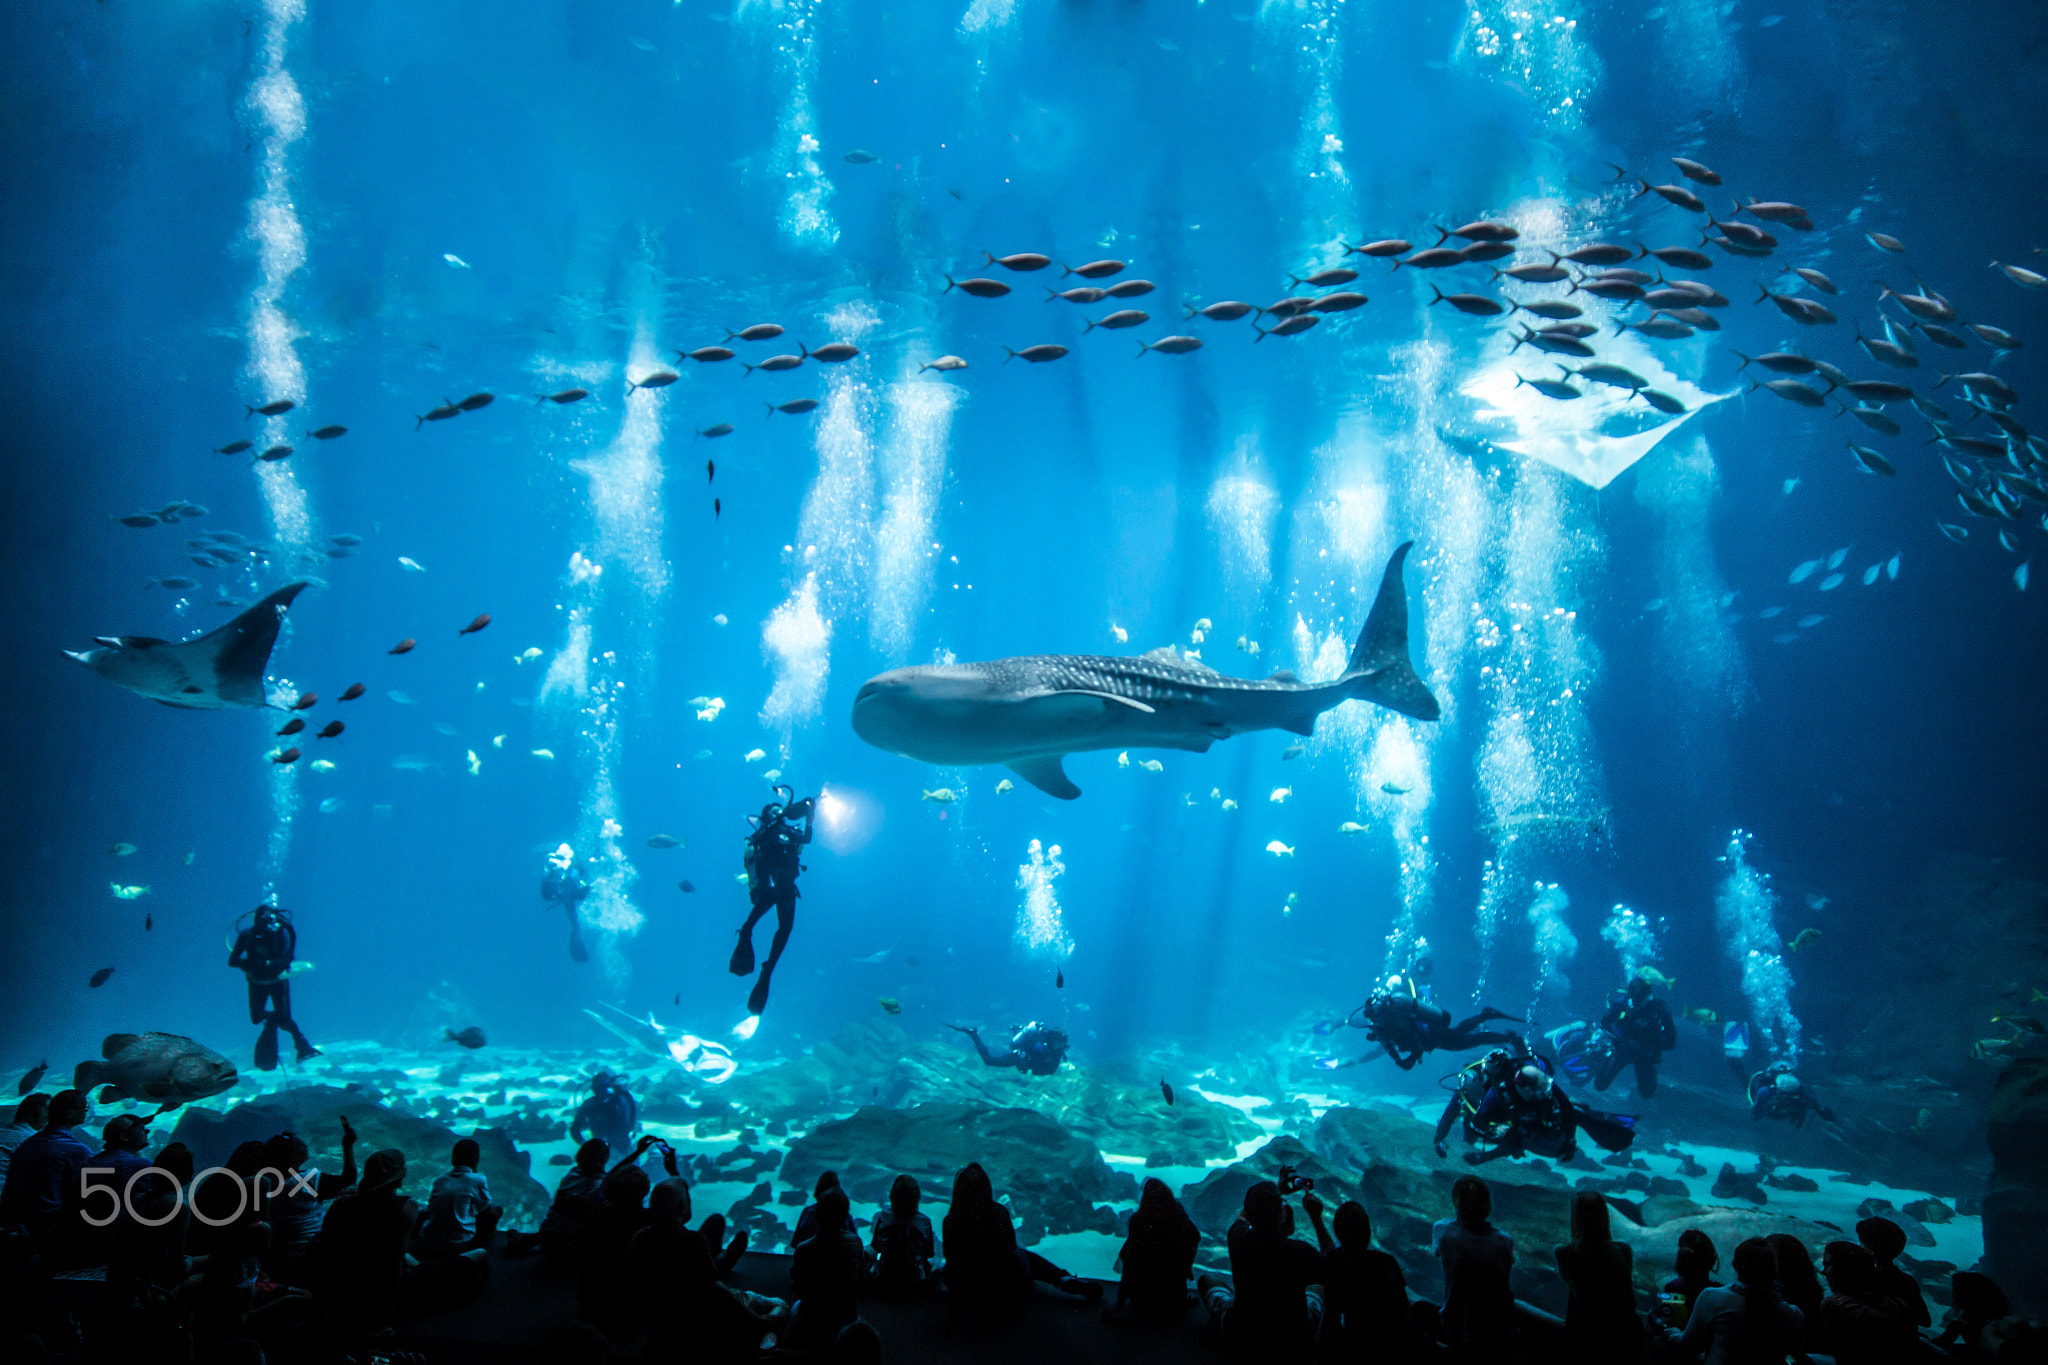 General 2048x1365 aquarium fish animals 500px whale shark manta rays diving underwater cyan blue bubbles